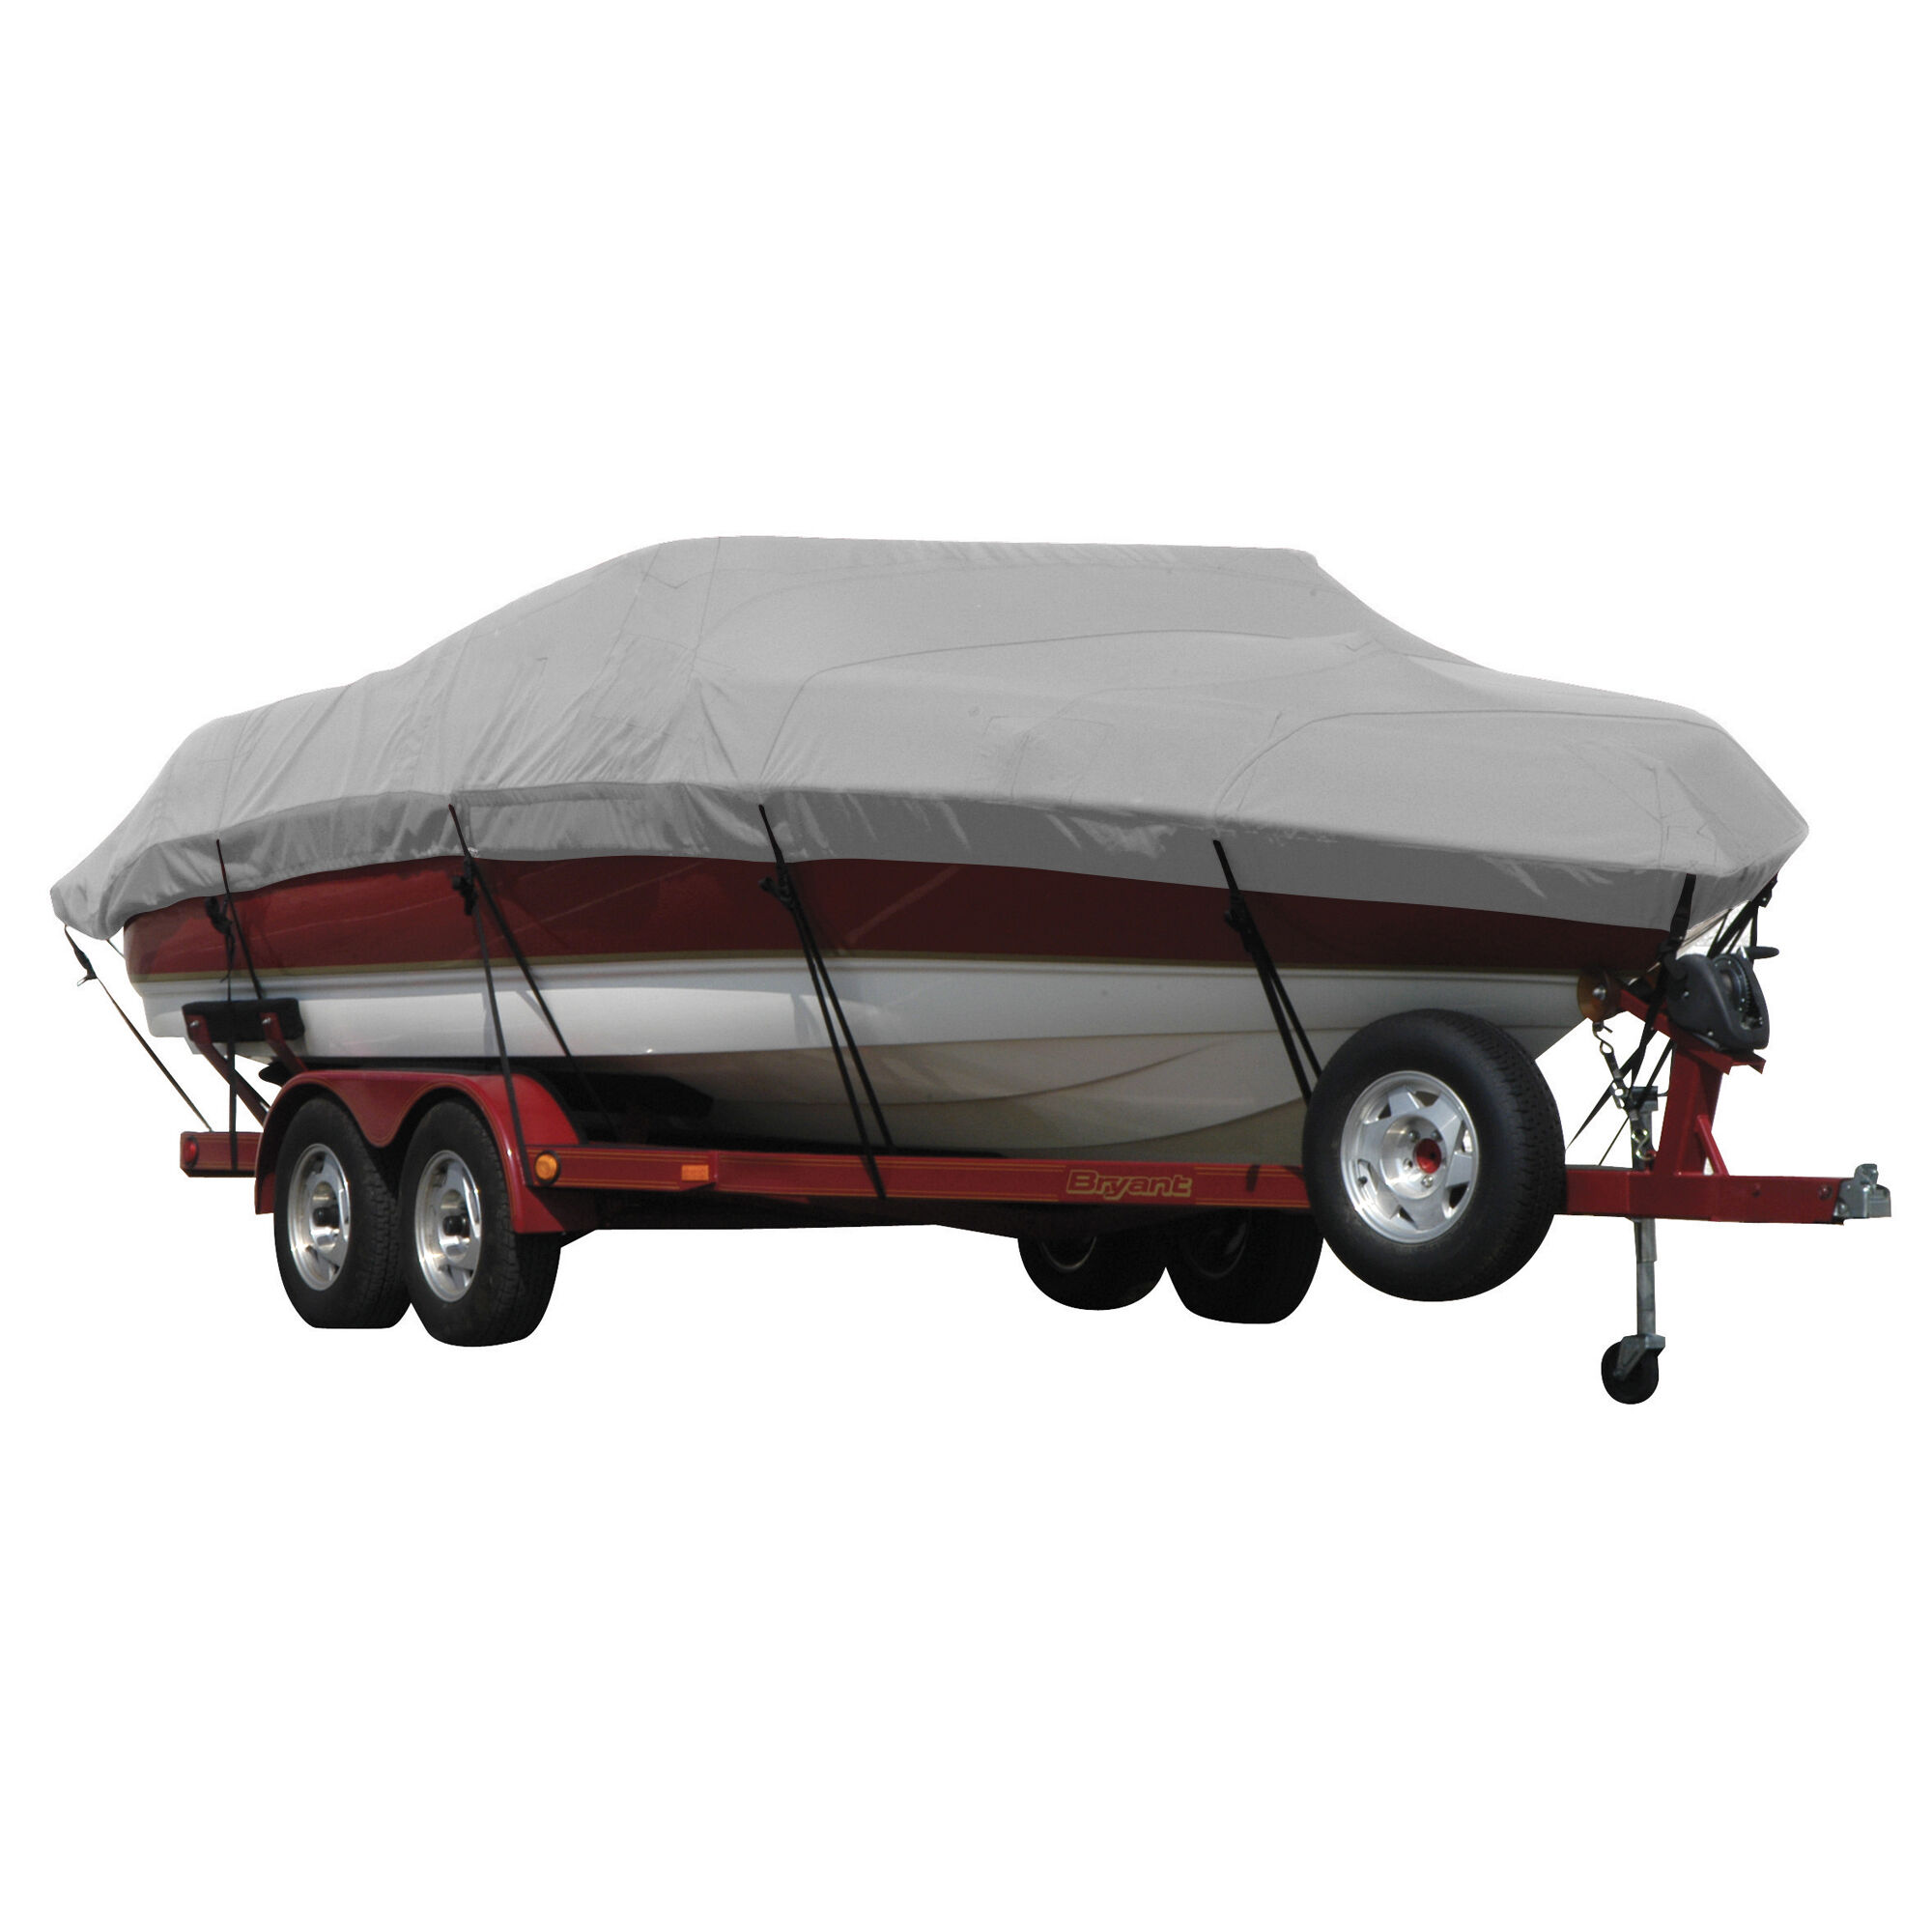 Covermate Exact Fit Sunbrella Boat Cover for Sea Ray 250 Cc 250 Cc No Pulpit I/O. Grey